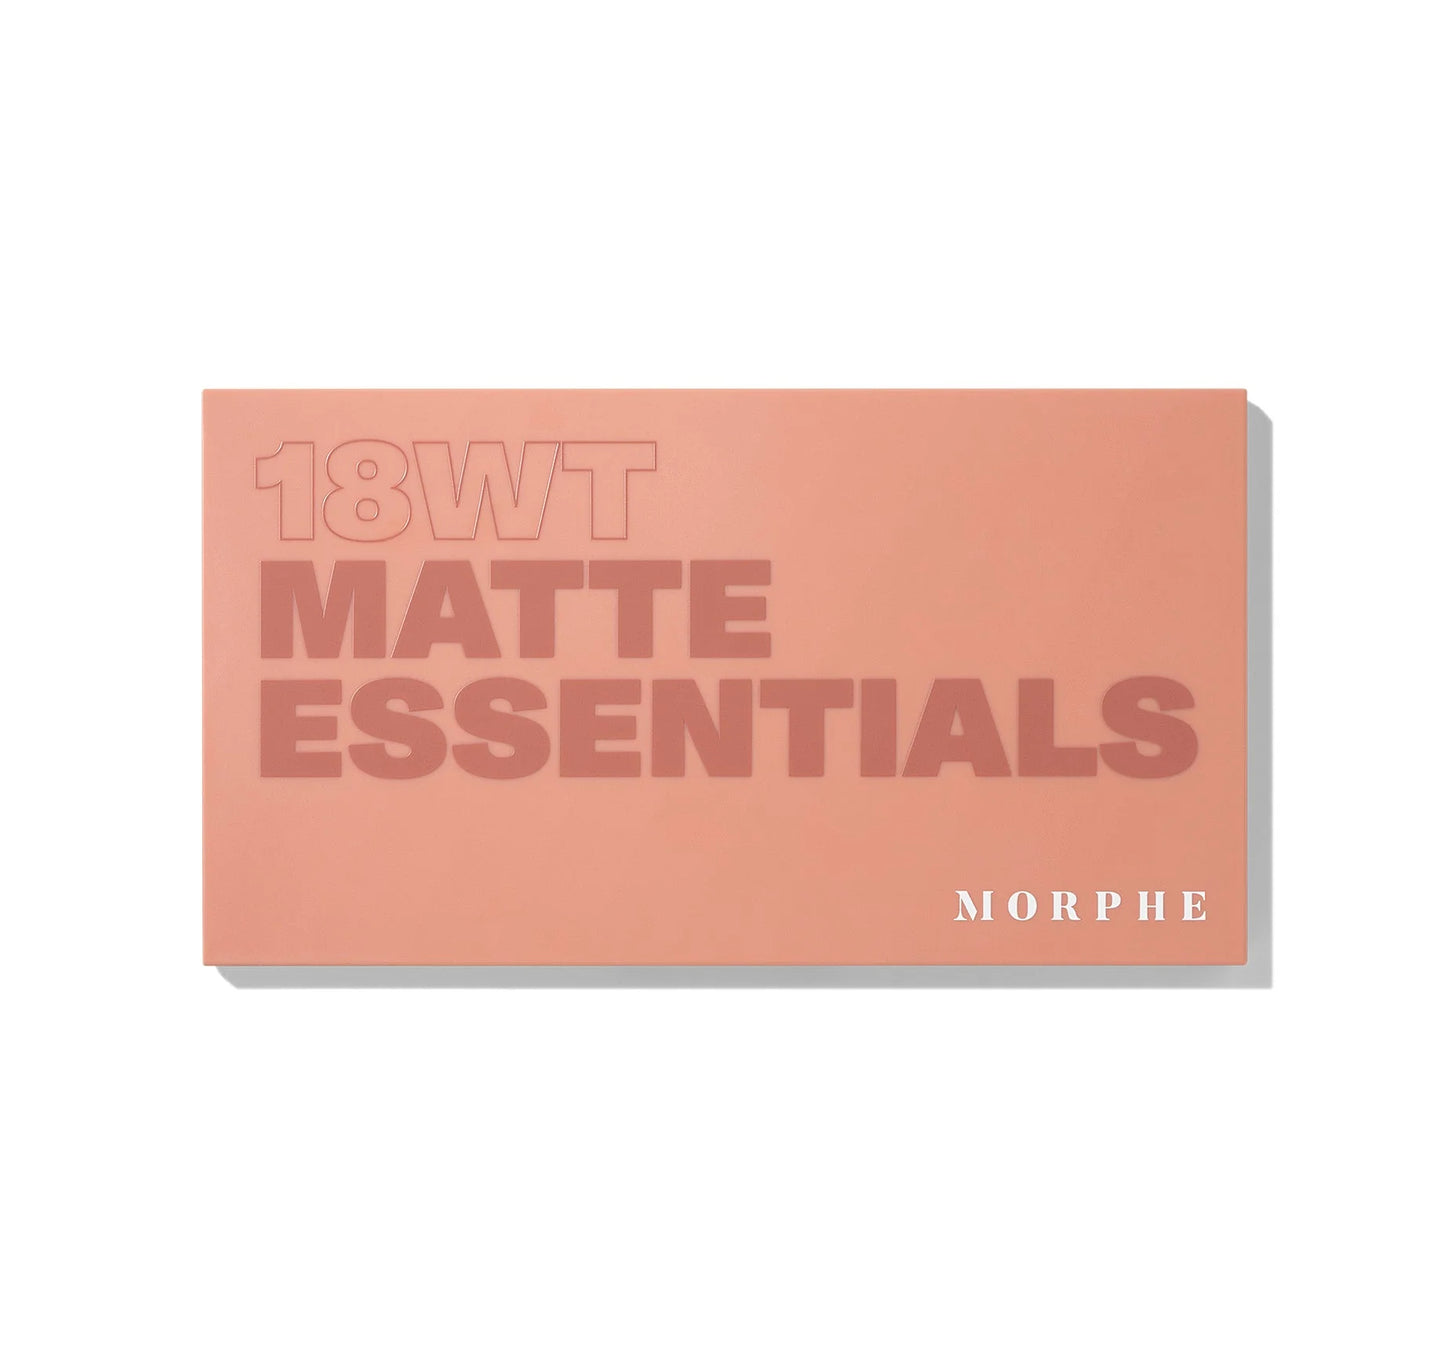 Morphe 18WT Matte Essentials Artistry Palette